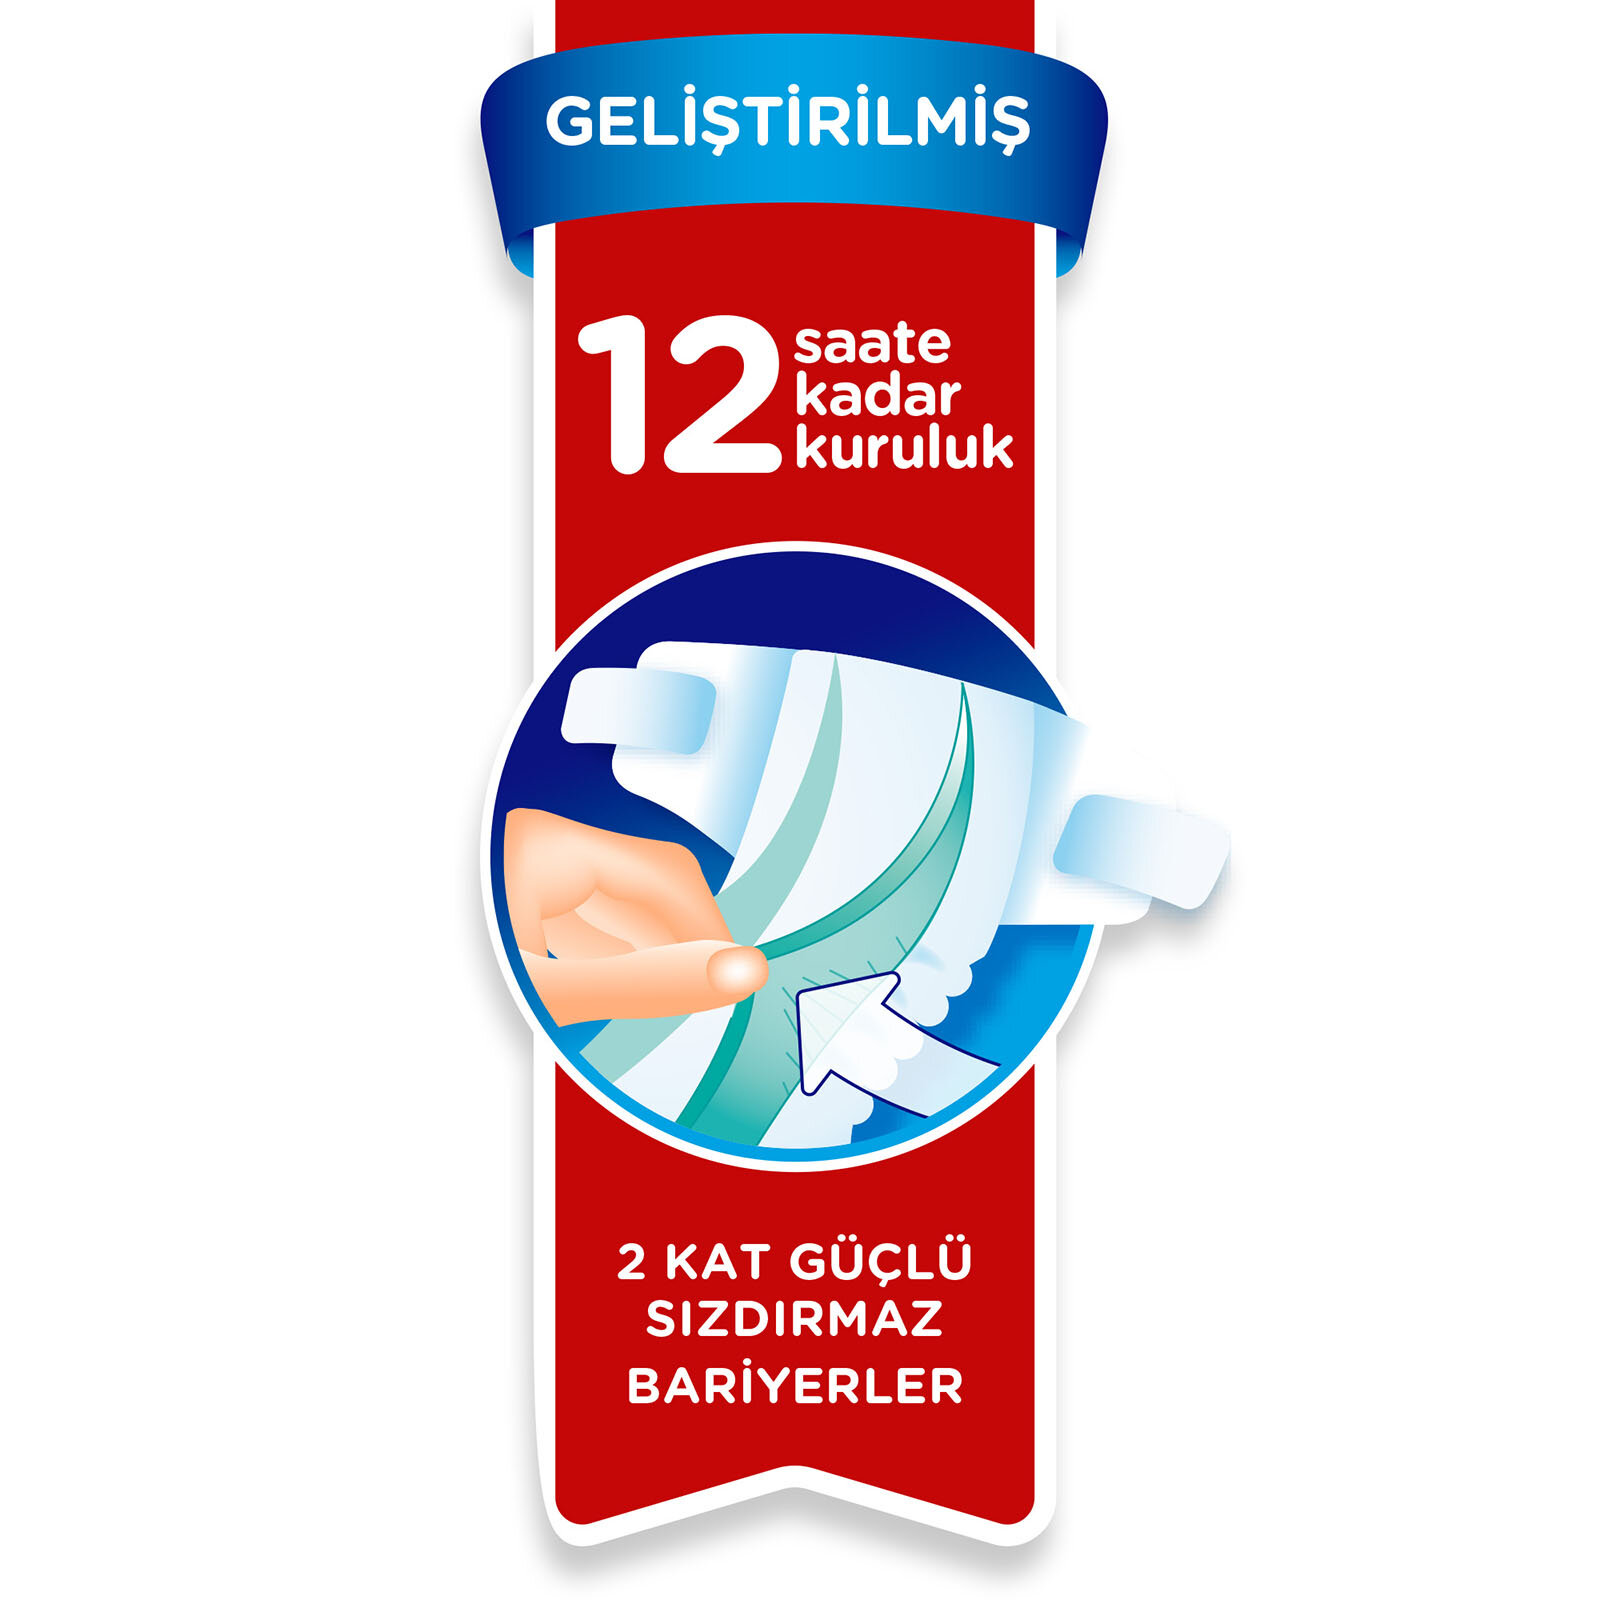 Bebek Bezi Aktif Bebek 1 Beden Yenidoğan Standart Paket 2-5 kg 44 Adet